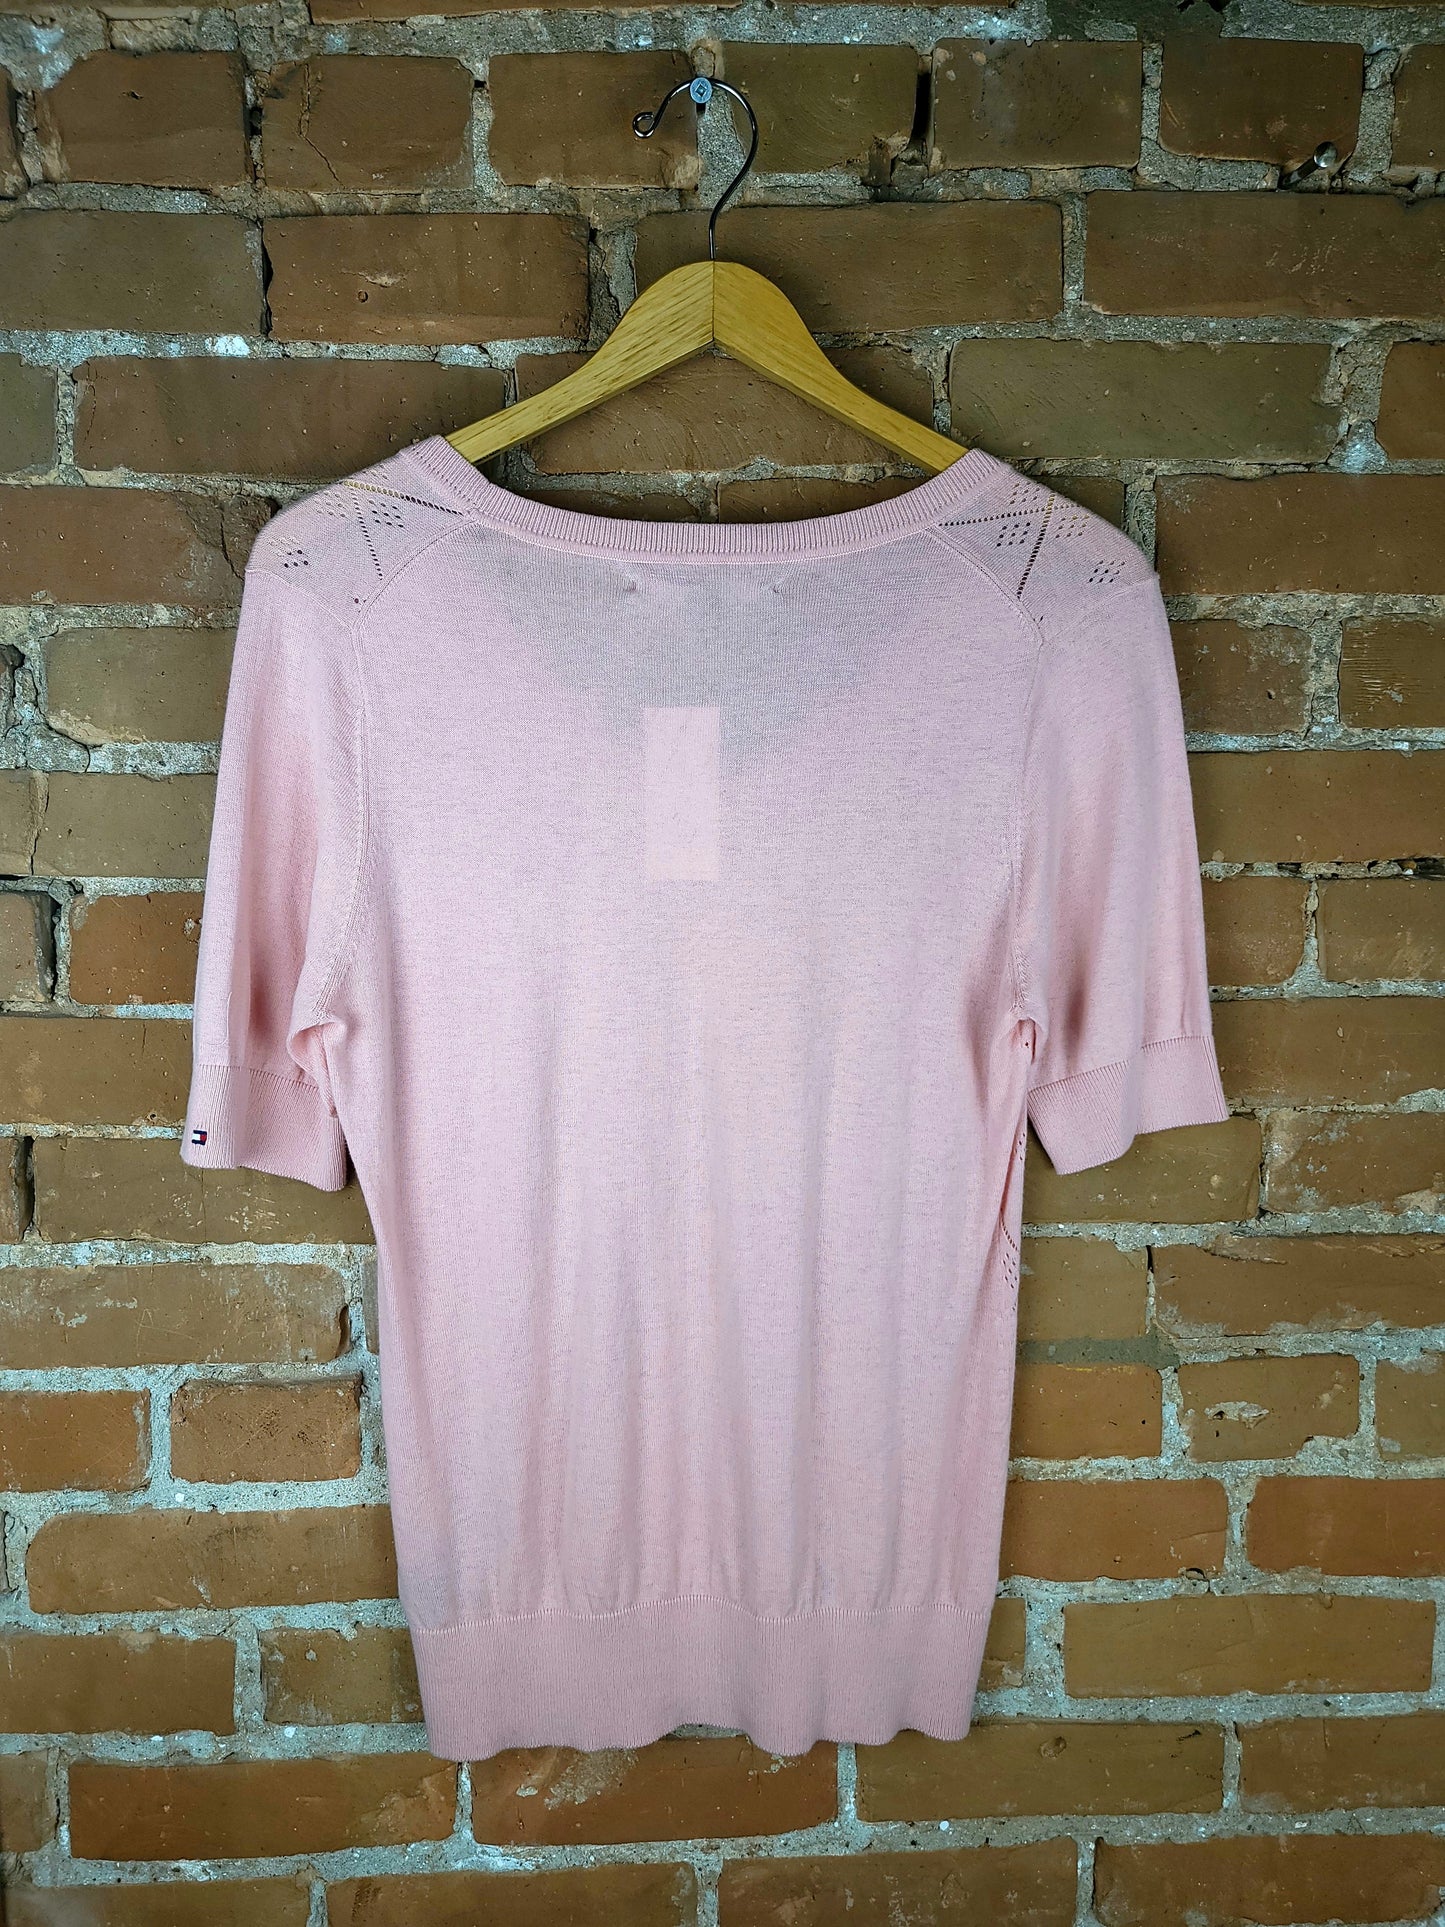 Tommy Hilfiger Pink Knit 100% Cotton Shirt